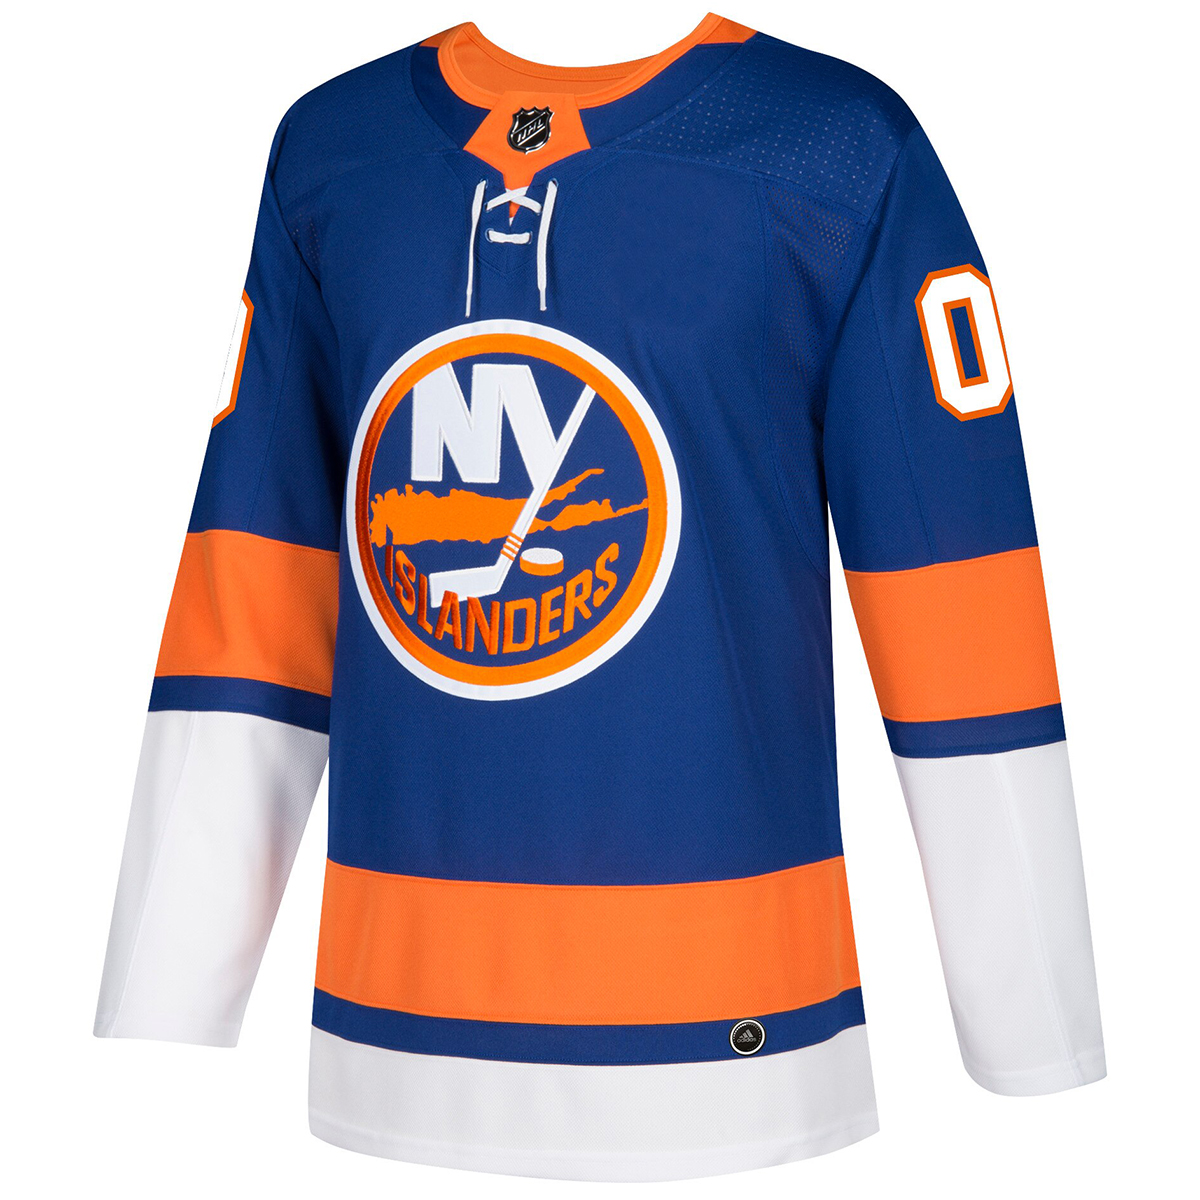 Adidas Men's New York Islanders Authentic Pro Home Jersey, Blue